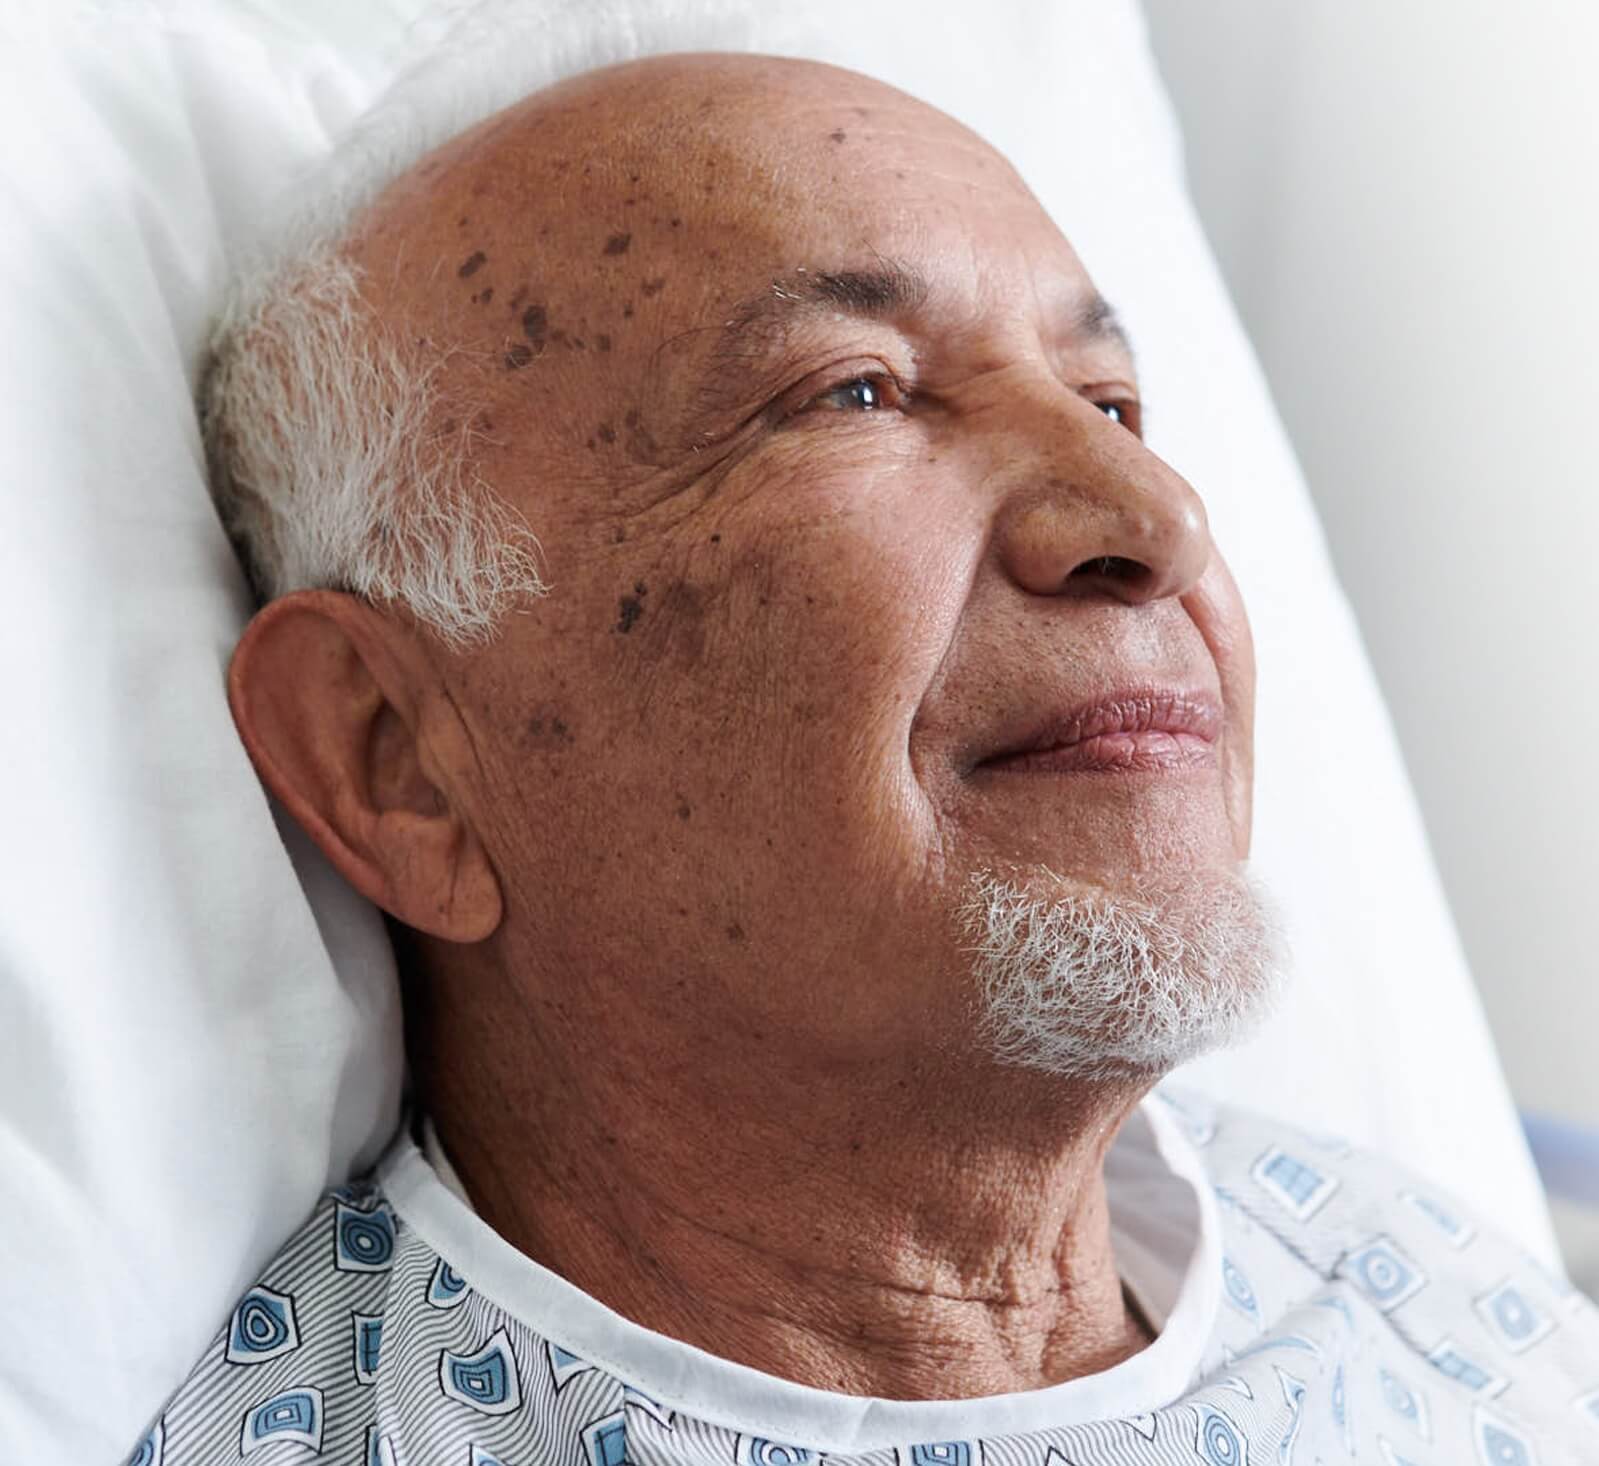 Elderly patient in bed smiling slightly.